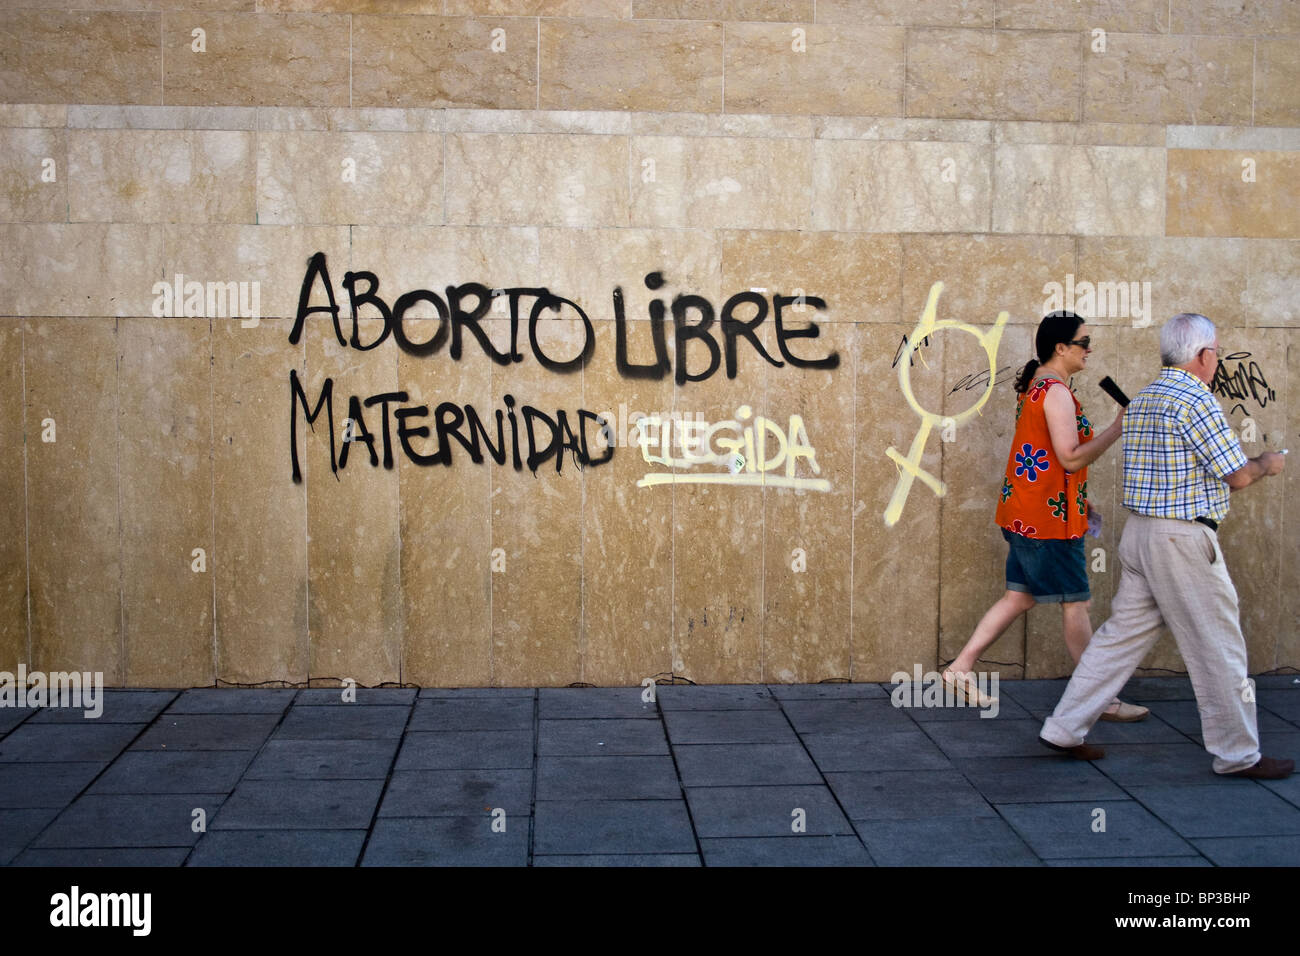 Graffiti, Free Abortion, Maternity Choice, Granada, Andalucia, Spain Stock Photo